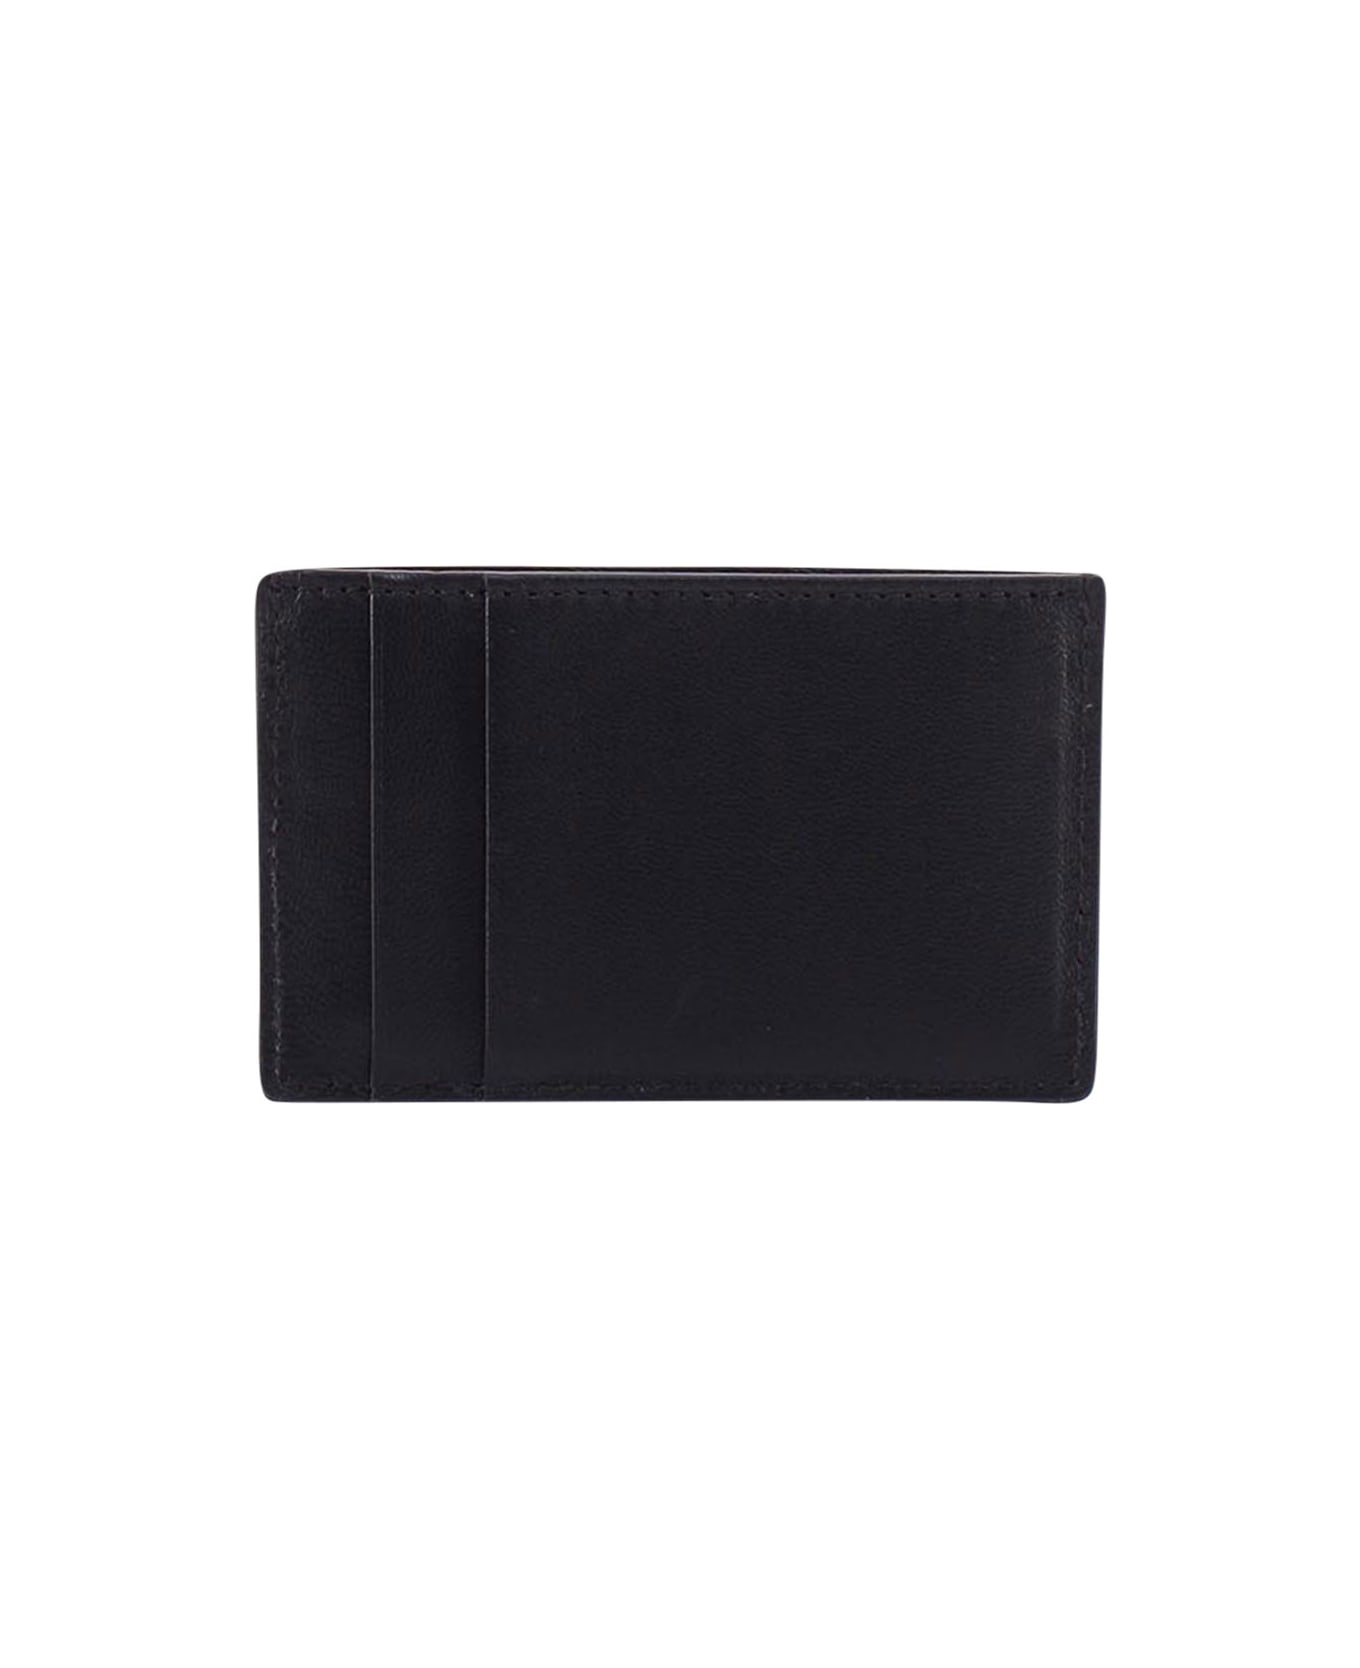 Alexander McQueen Card Holder - Black